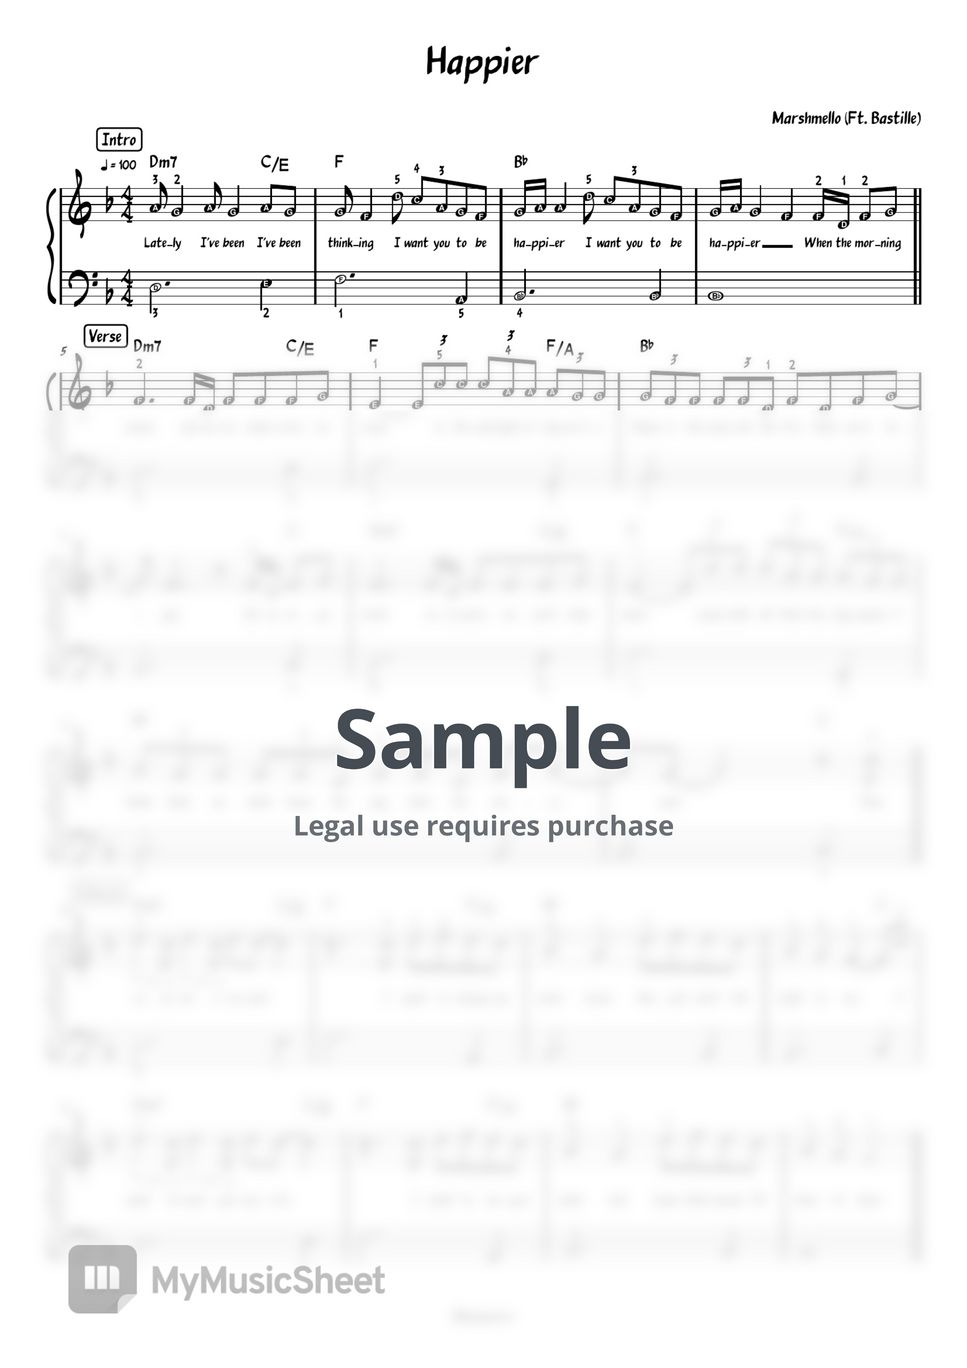 Marshmello - Happier (Piano solo) Sheets by Meowscore